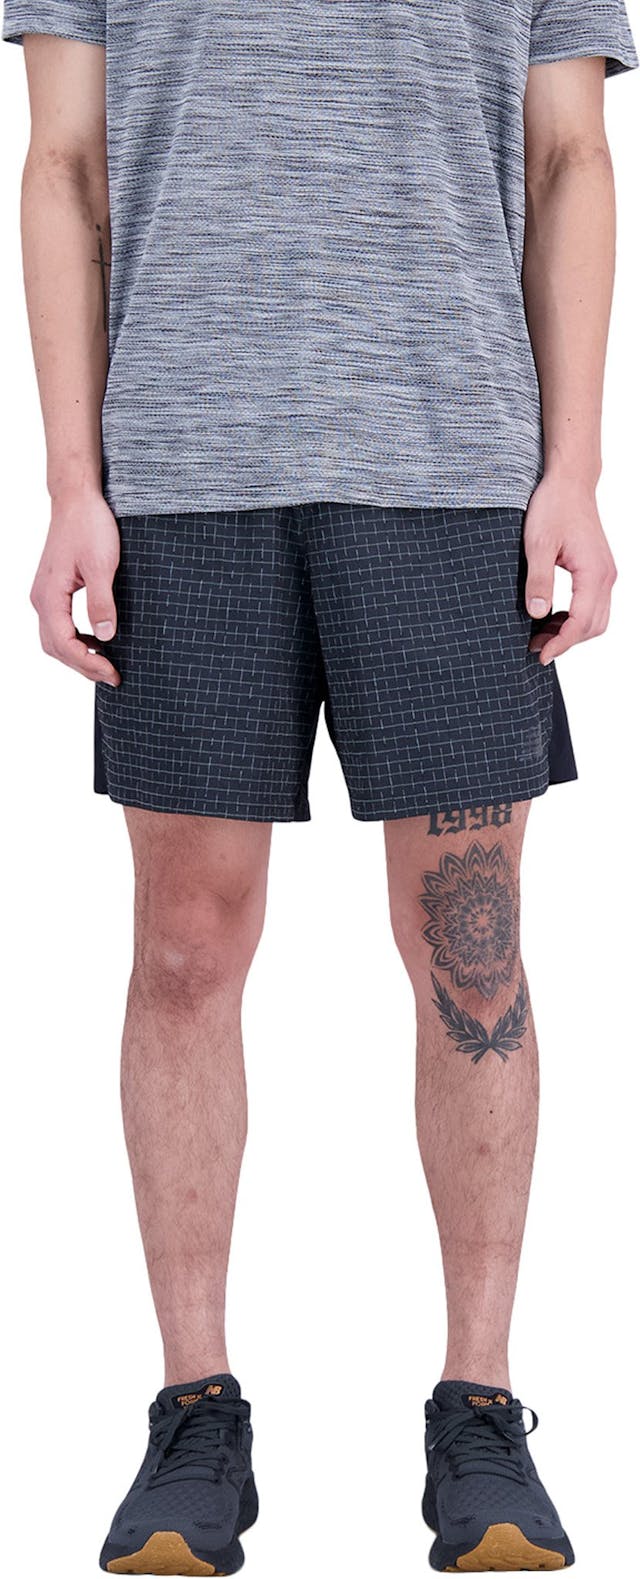 Product image for Impact Run Luminous Shorts - Men's